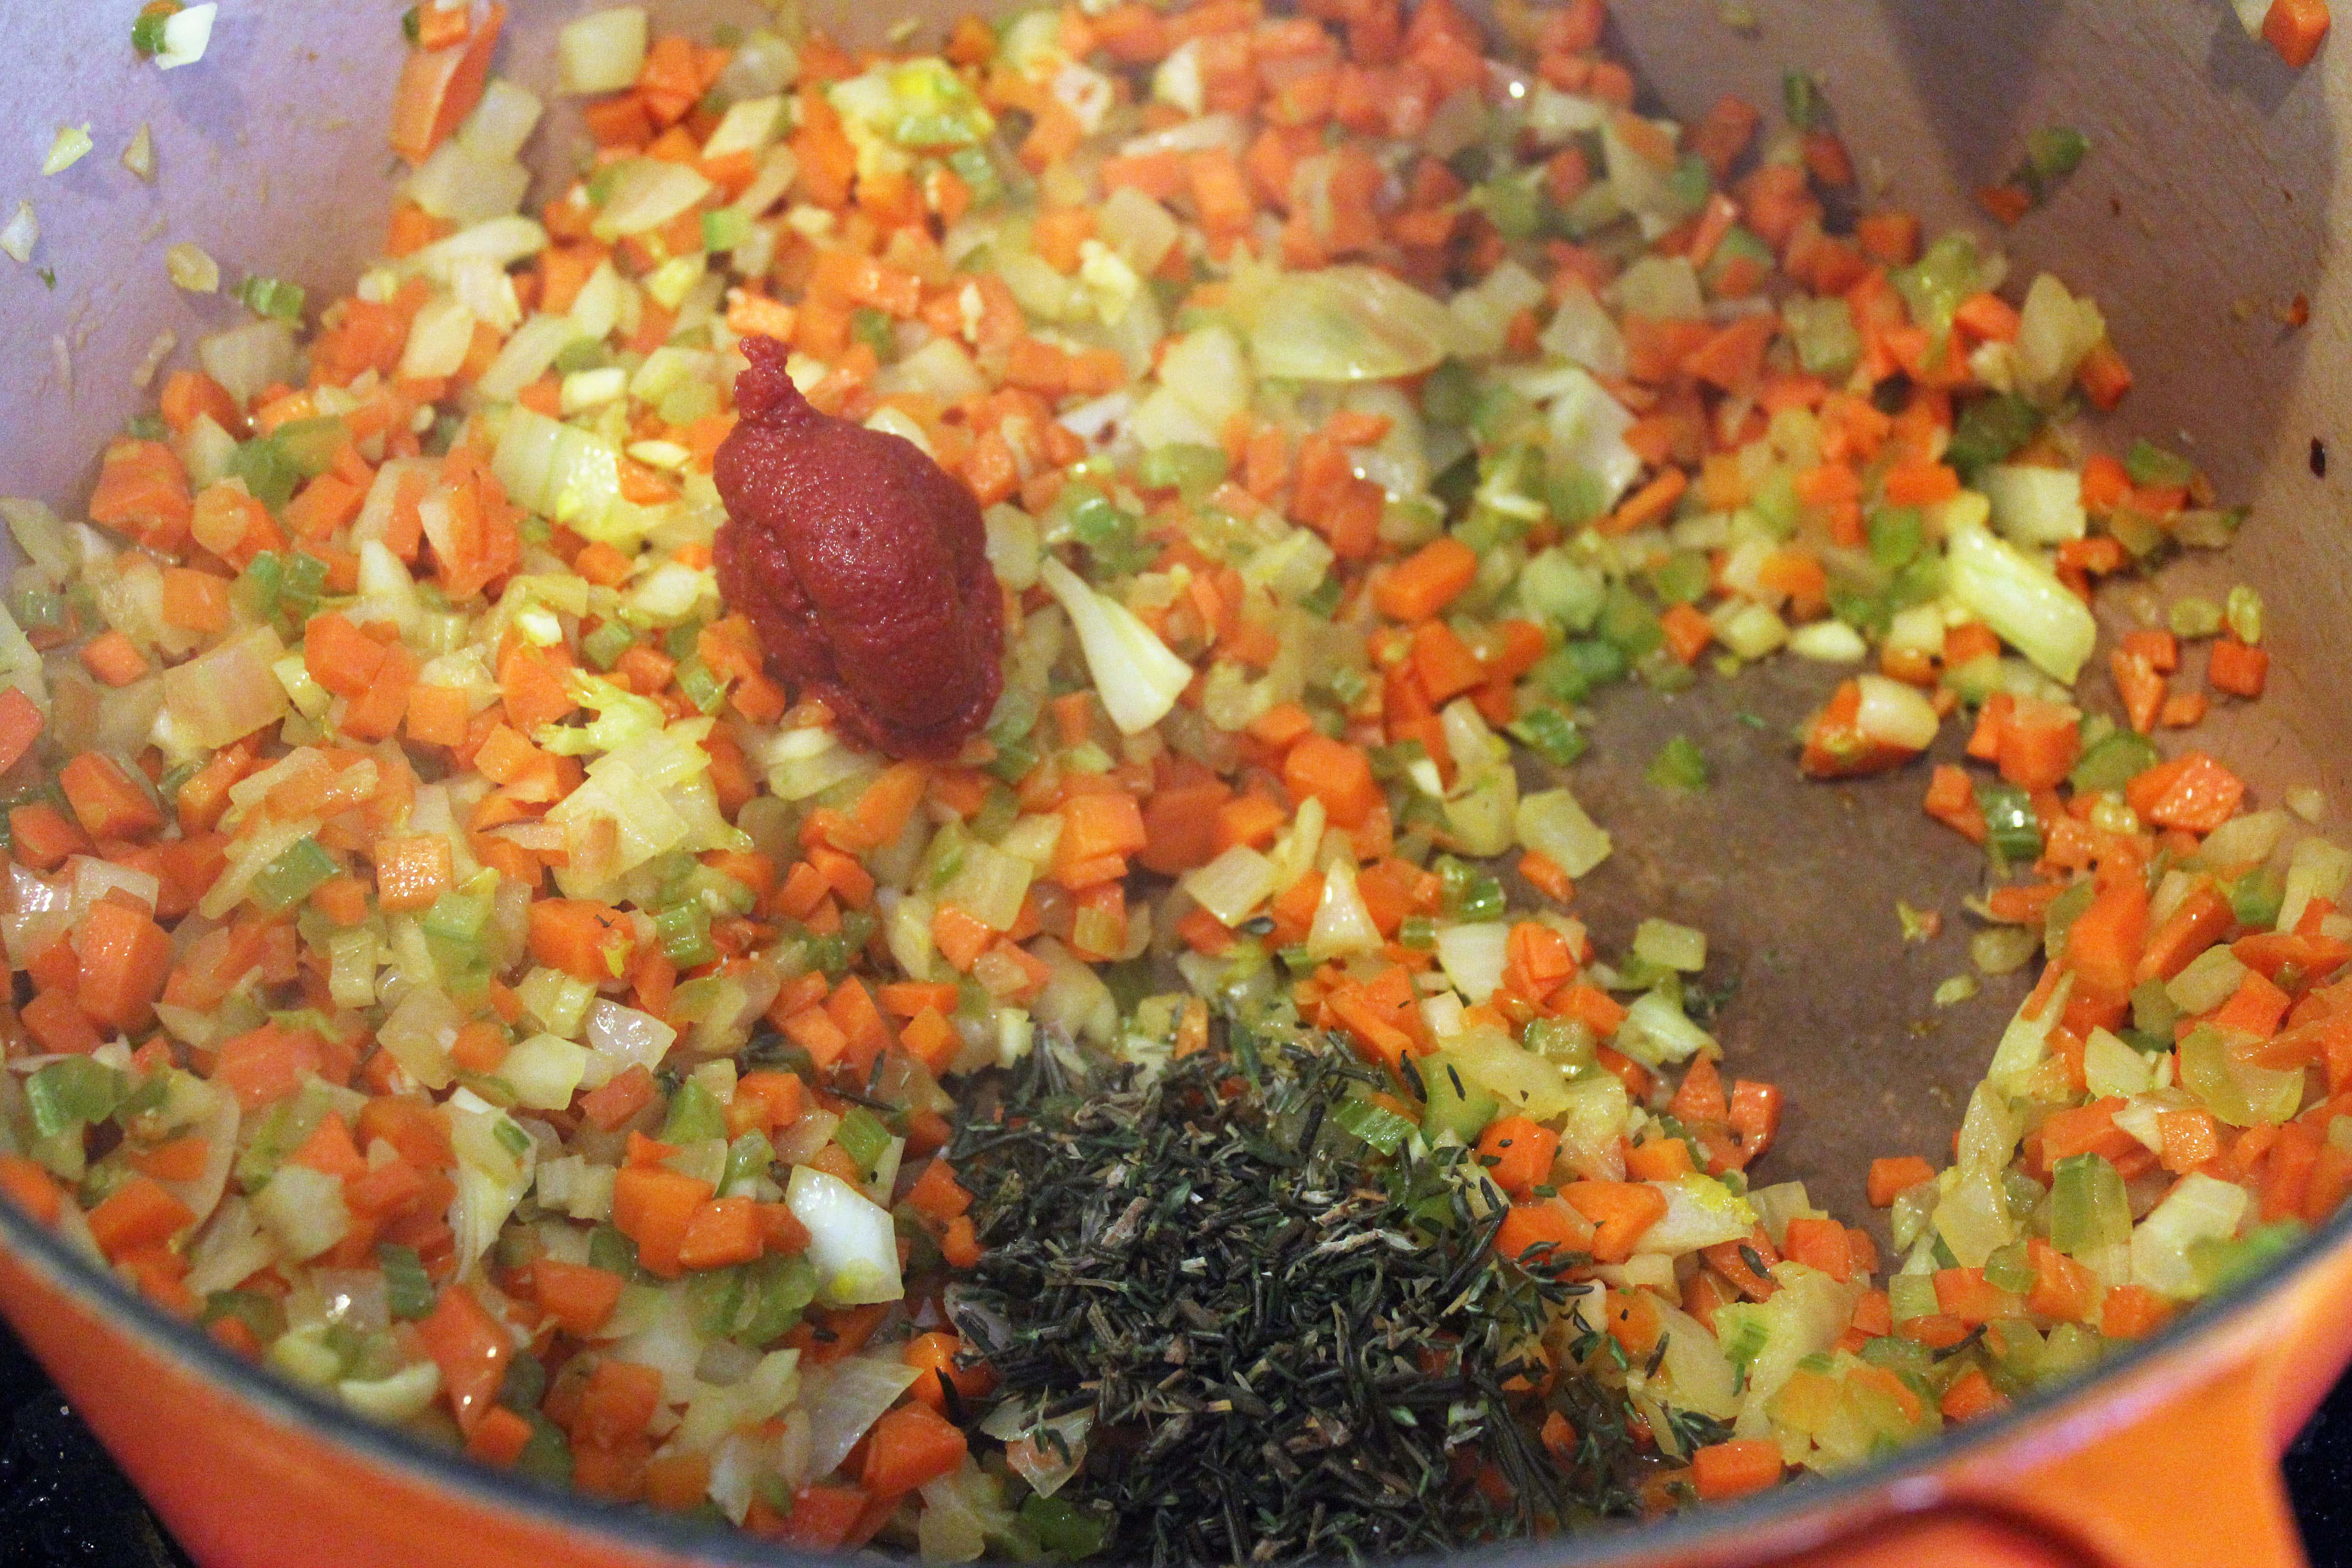 Add tomato paste and herbs to chopped veggies